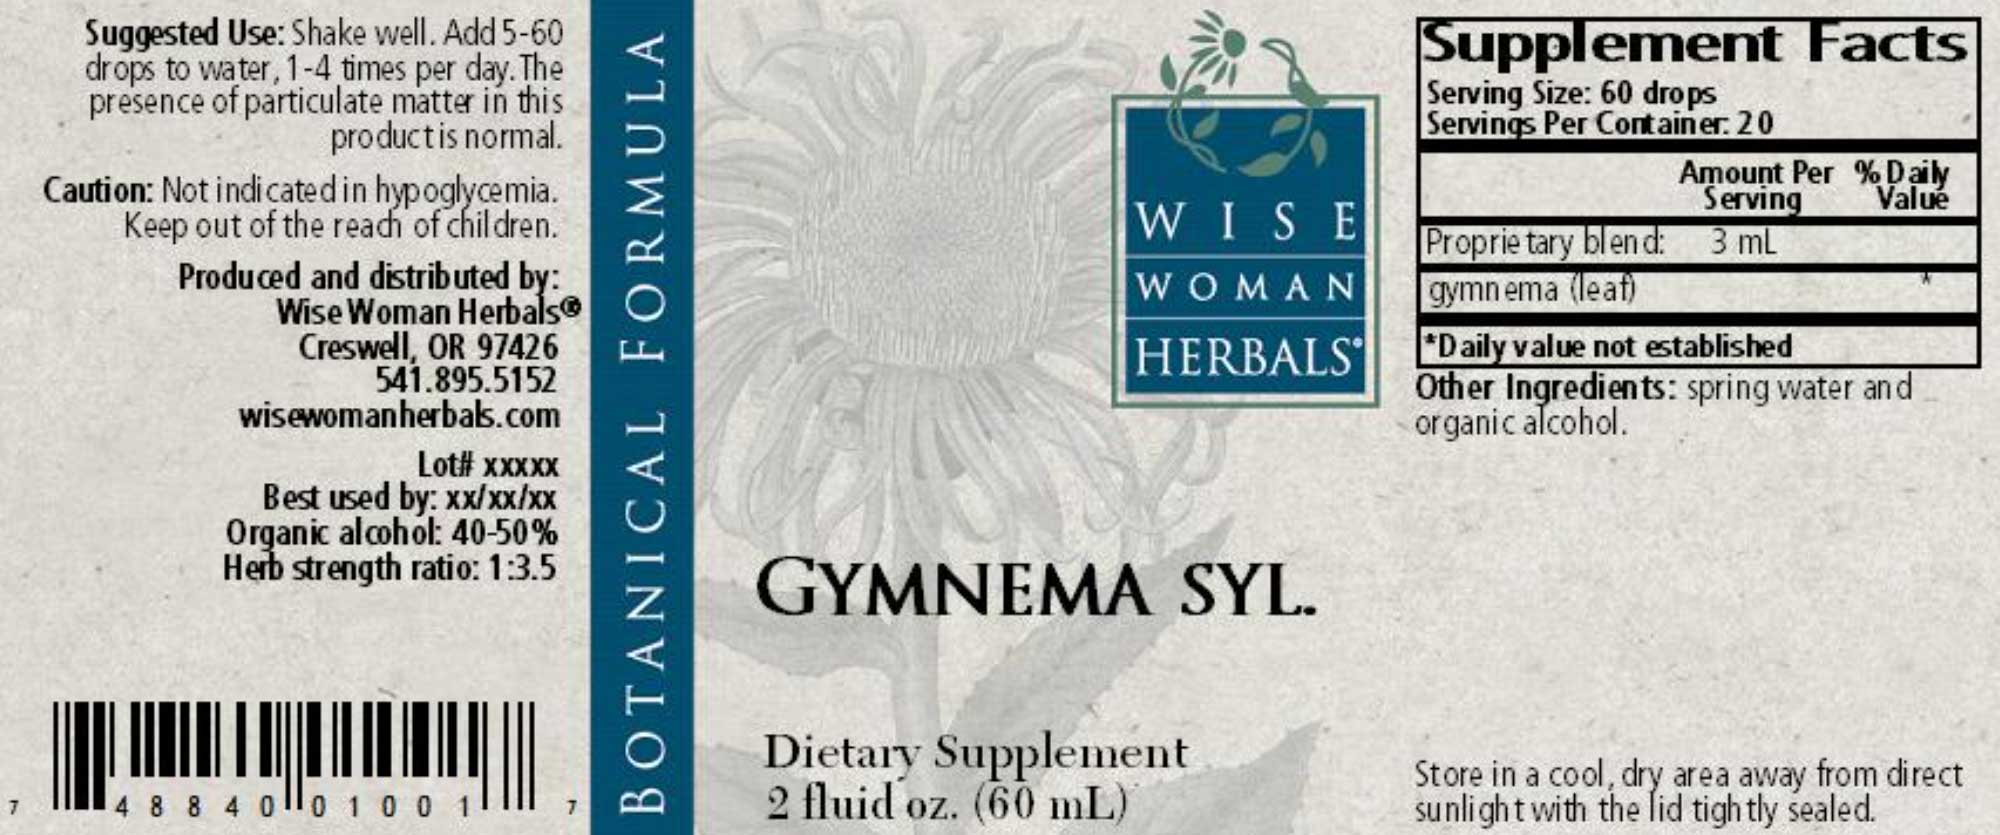 Wise Woman Herbals Gymnema Sylvestre Label